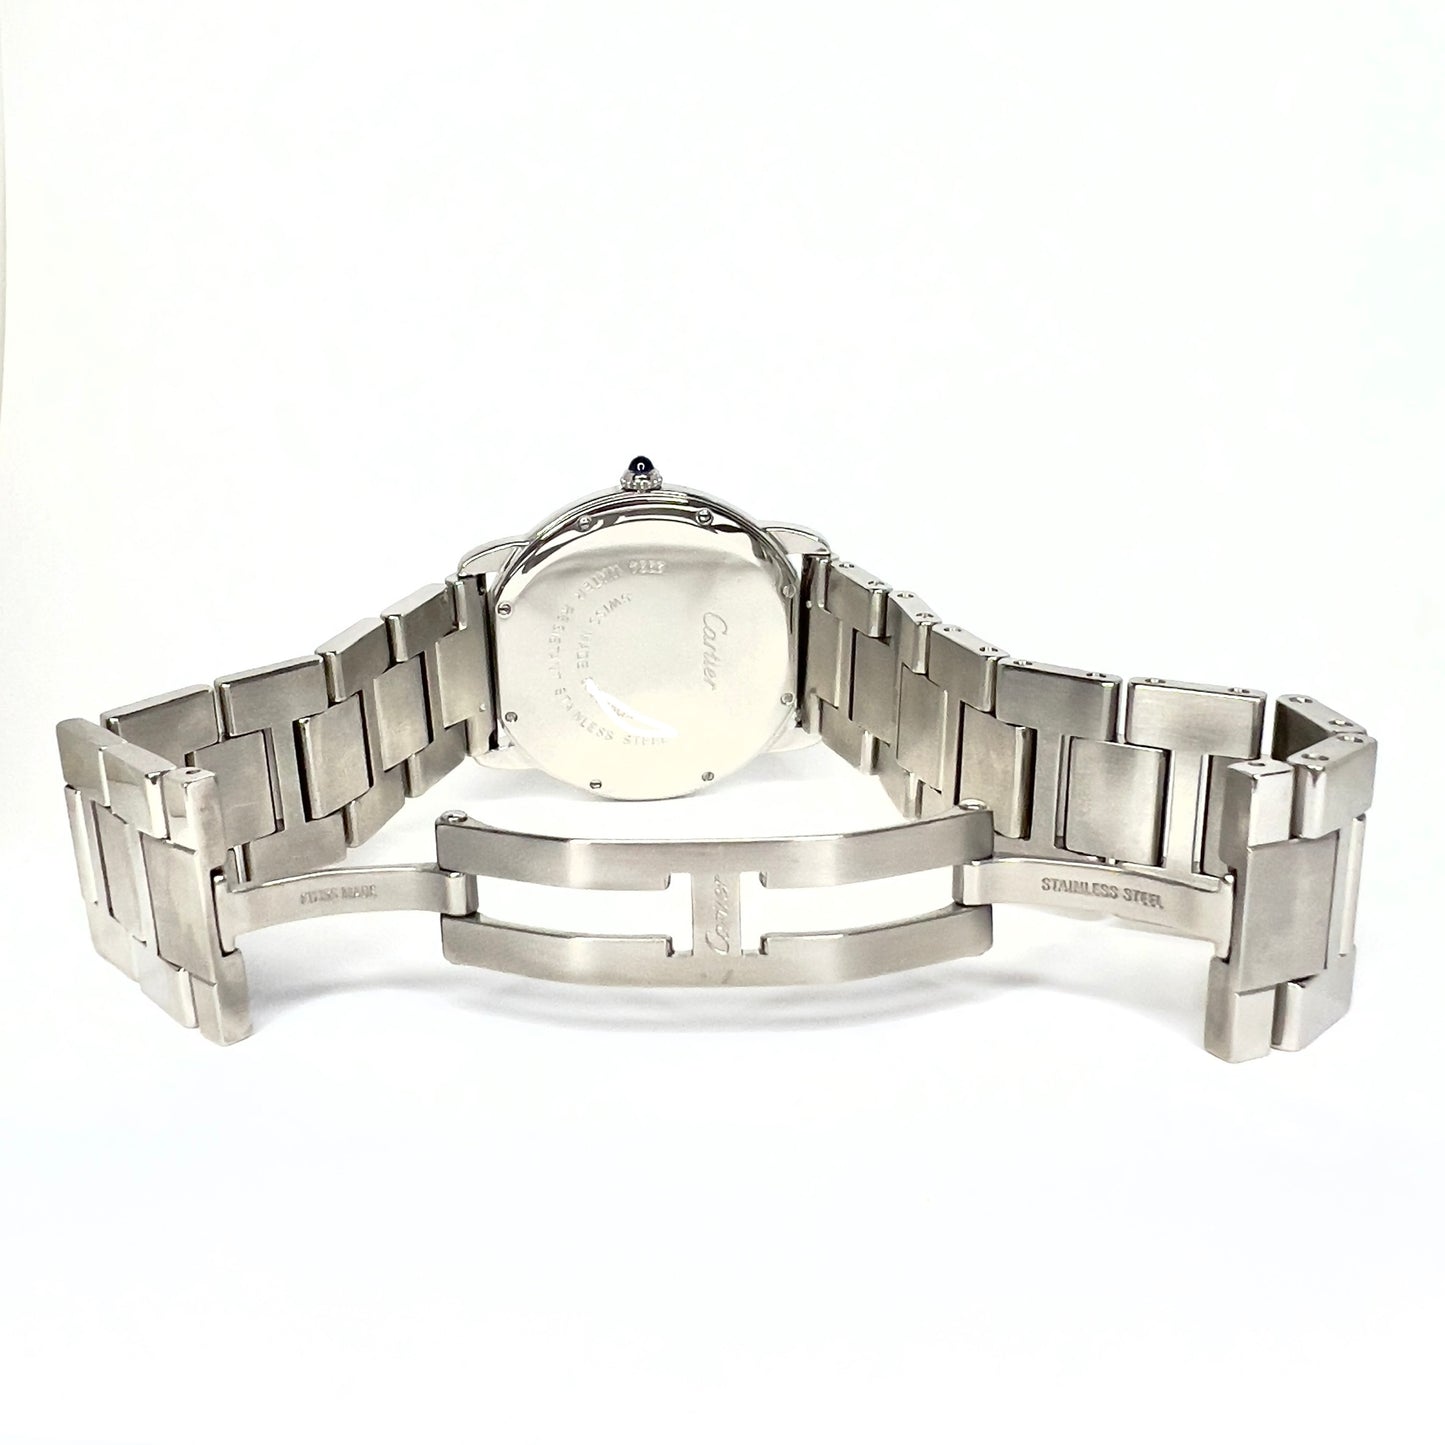 CARTIER RONDE SOLO Date 36mm Quartz Steel 1TCW DIAMOND Watch